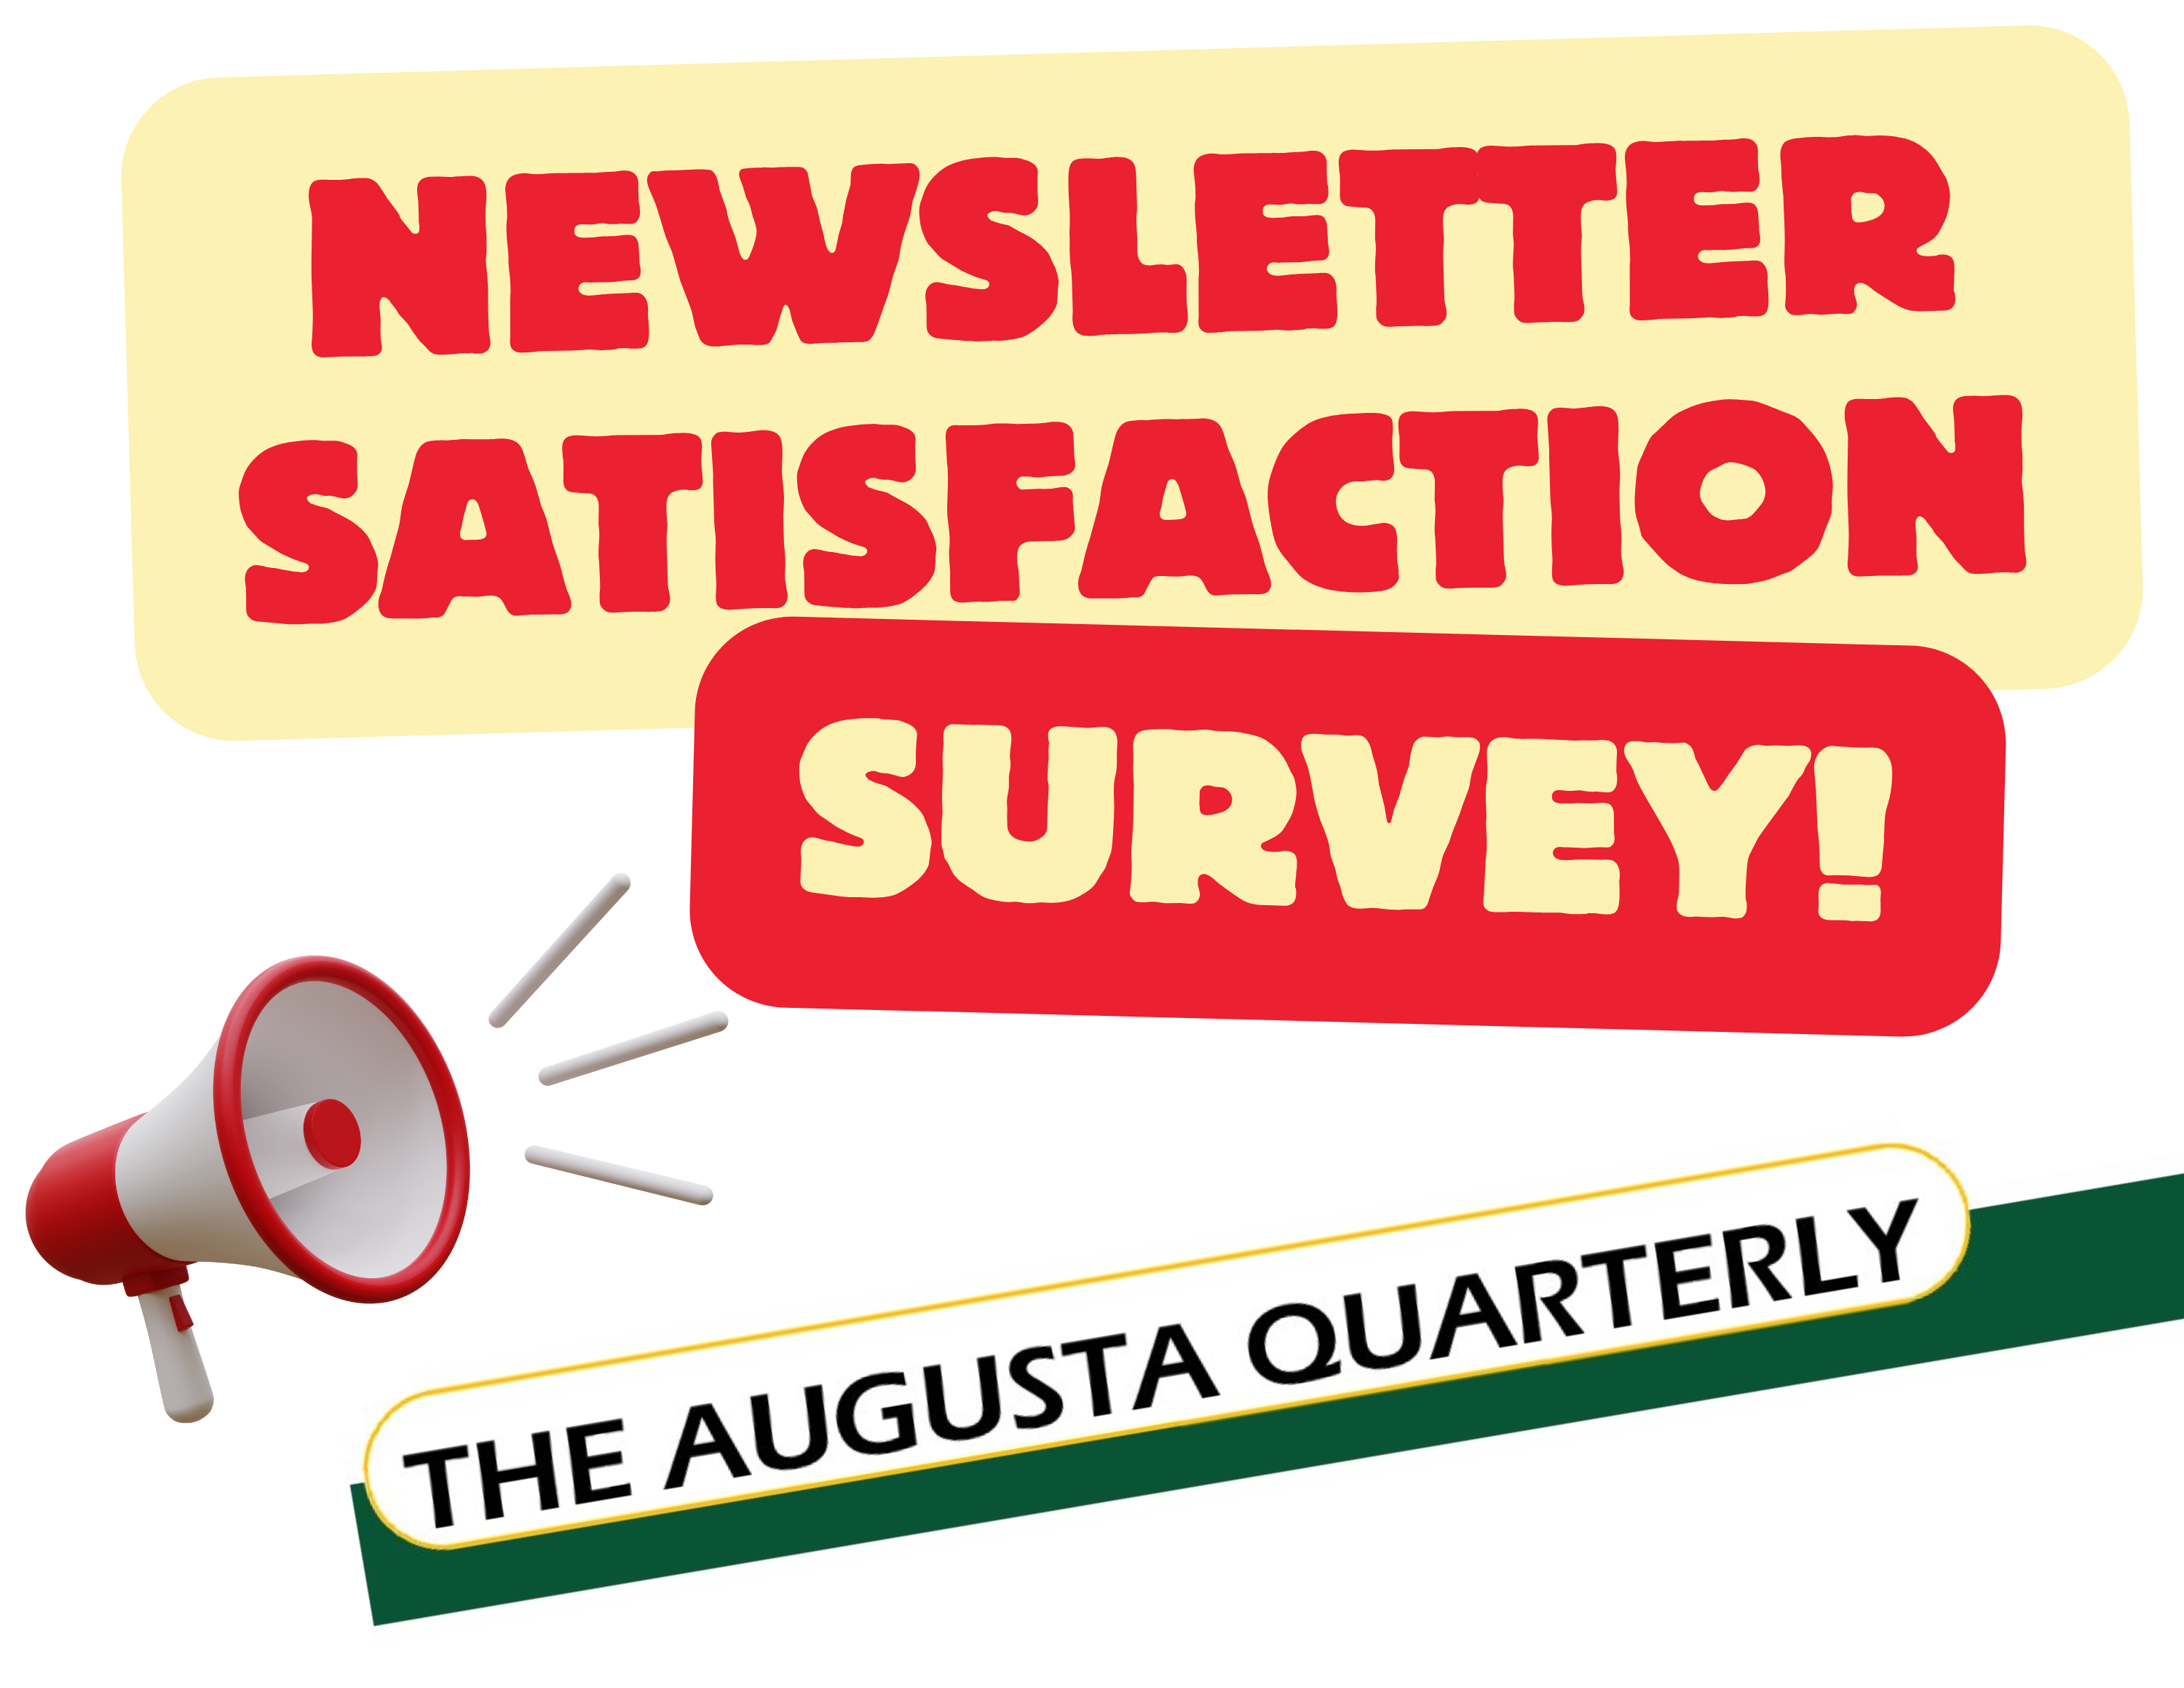 newsletter satisfaction survey re: the augusta quarterly